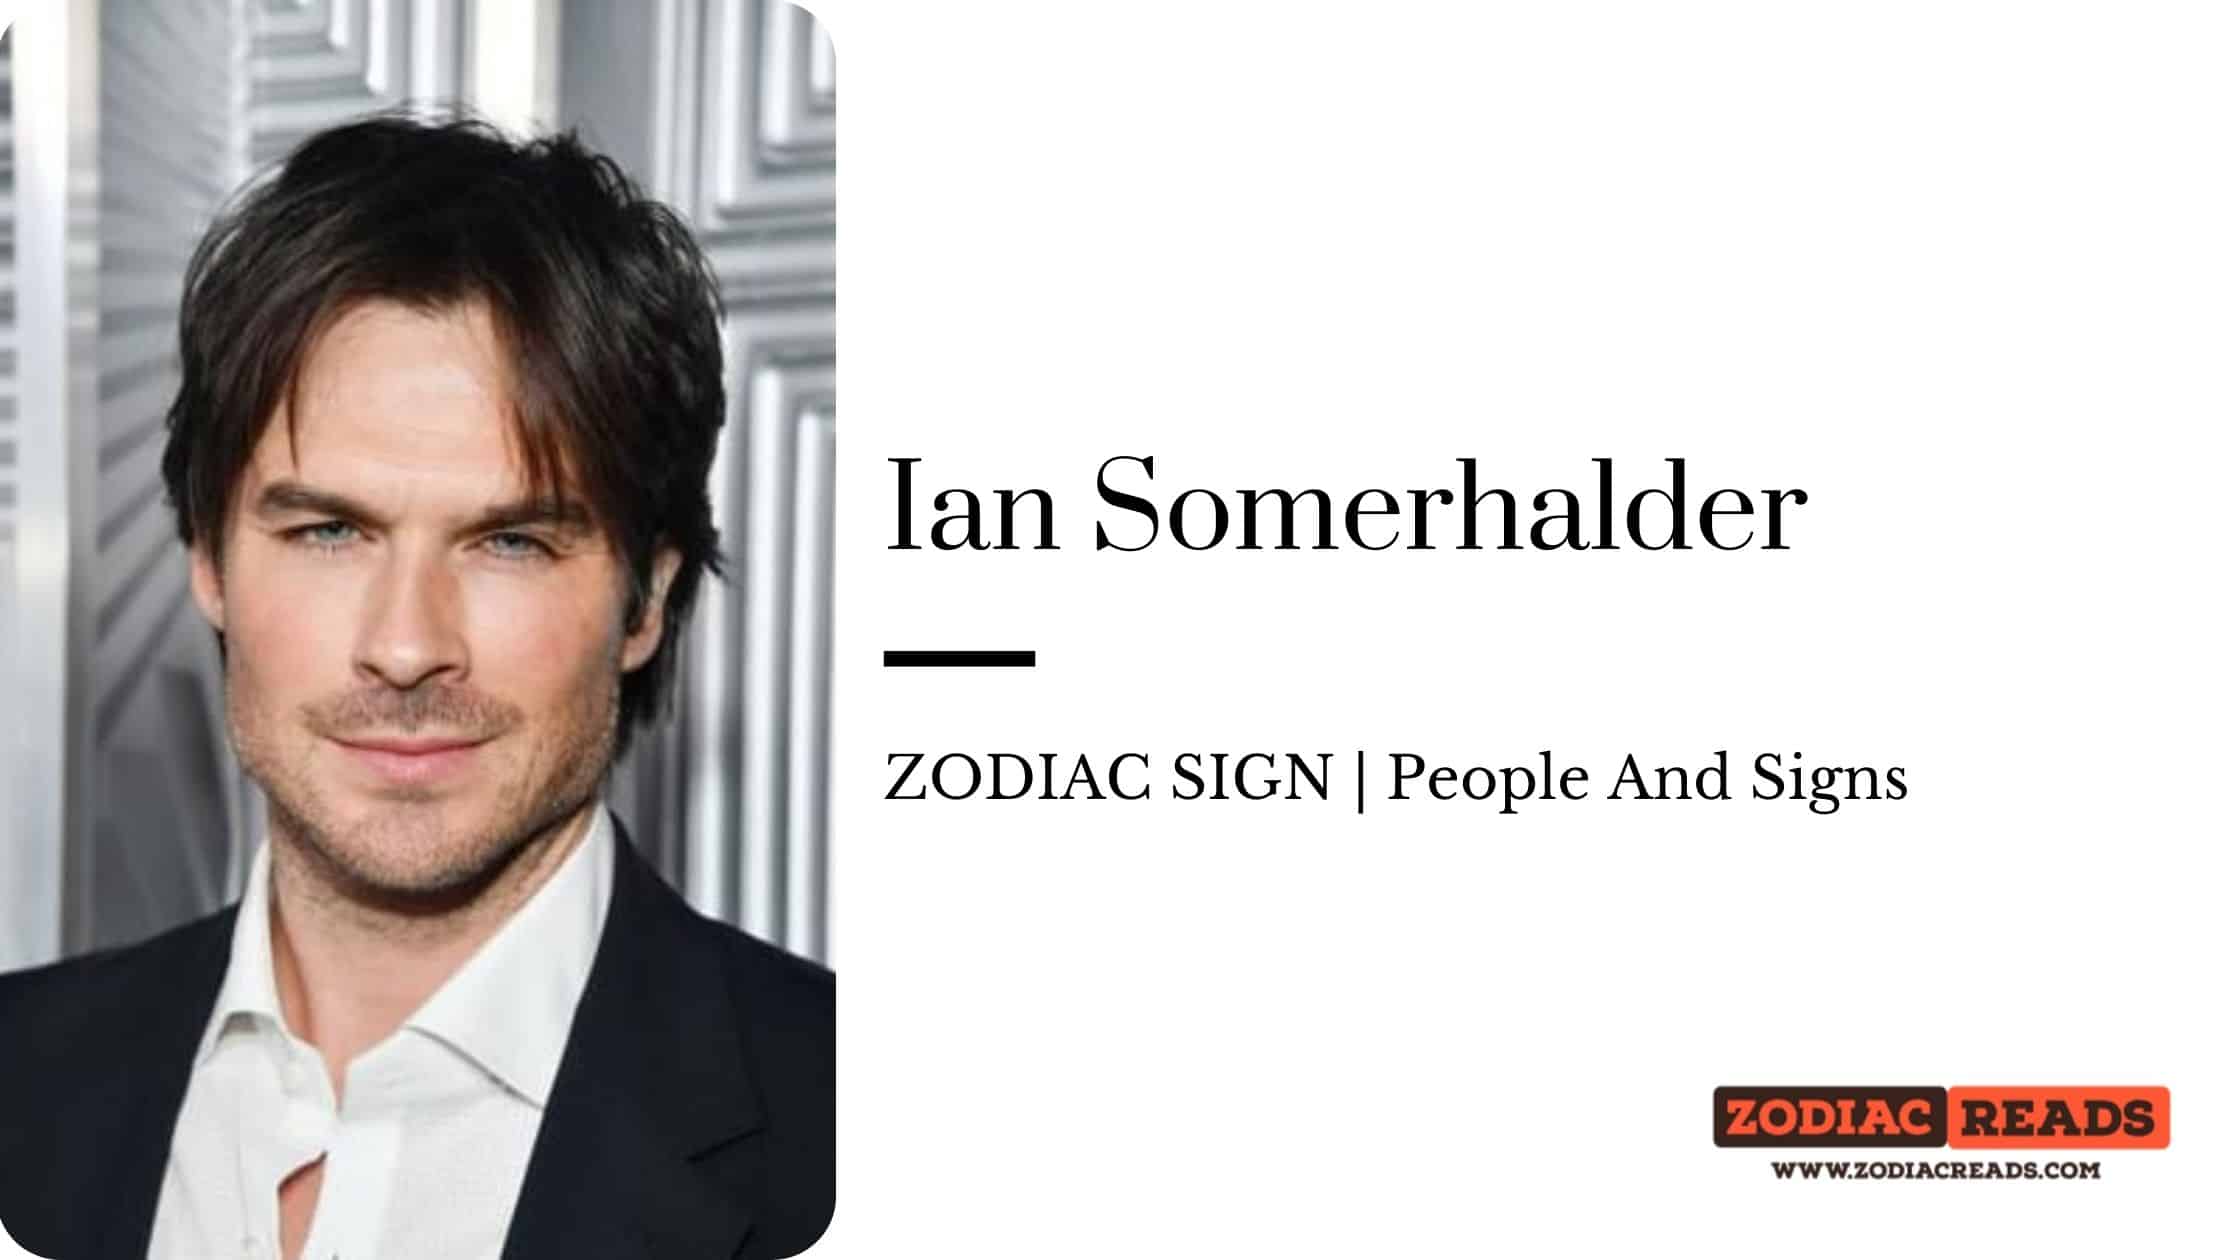 Ian Somerhalder zodiac